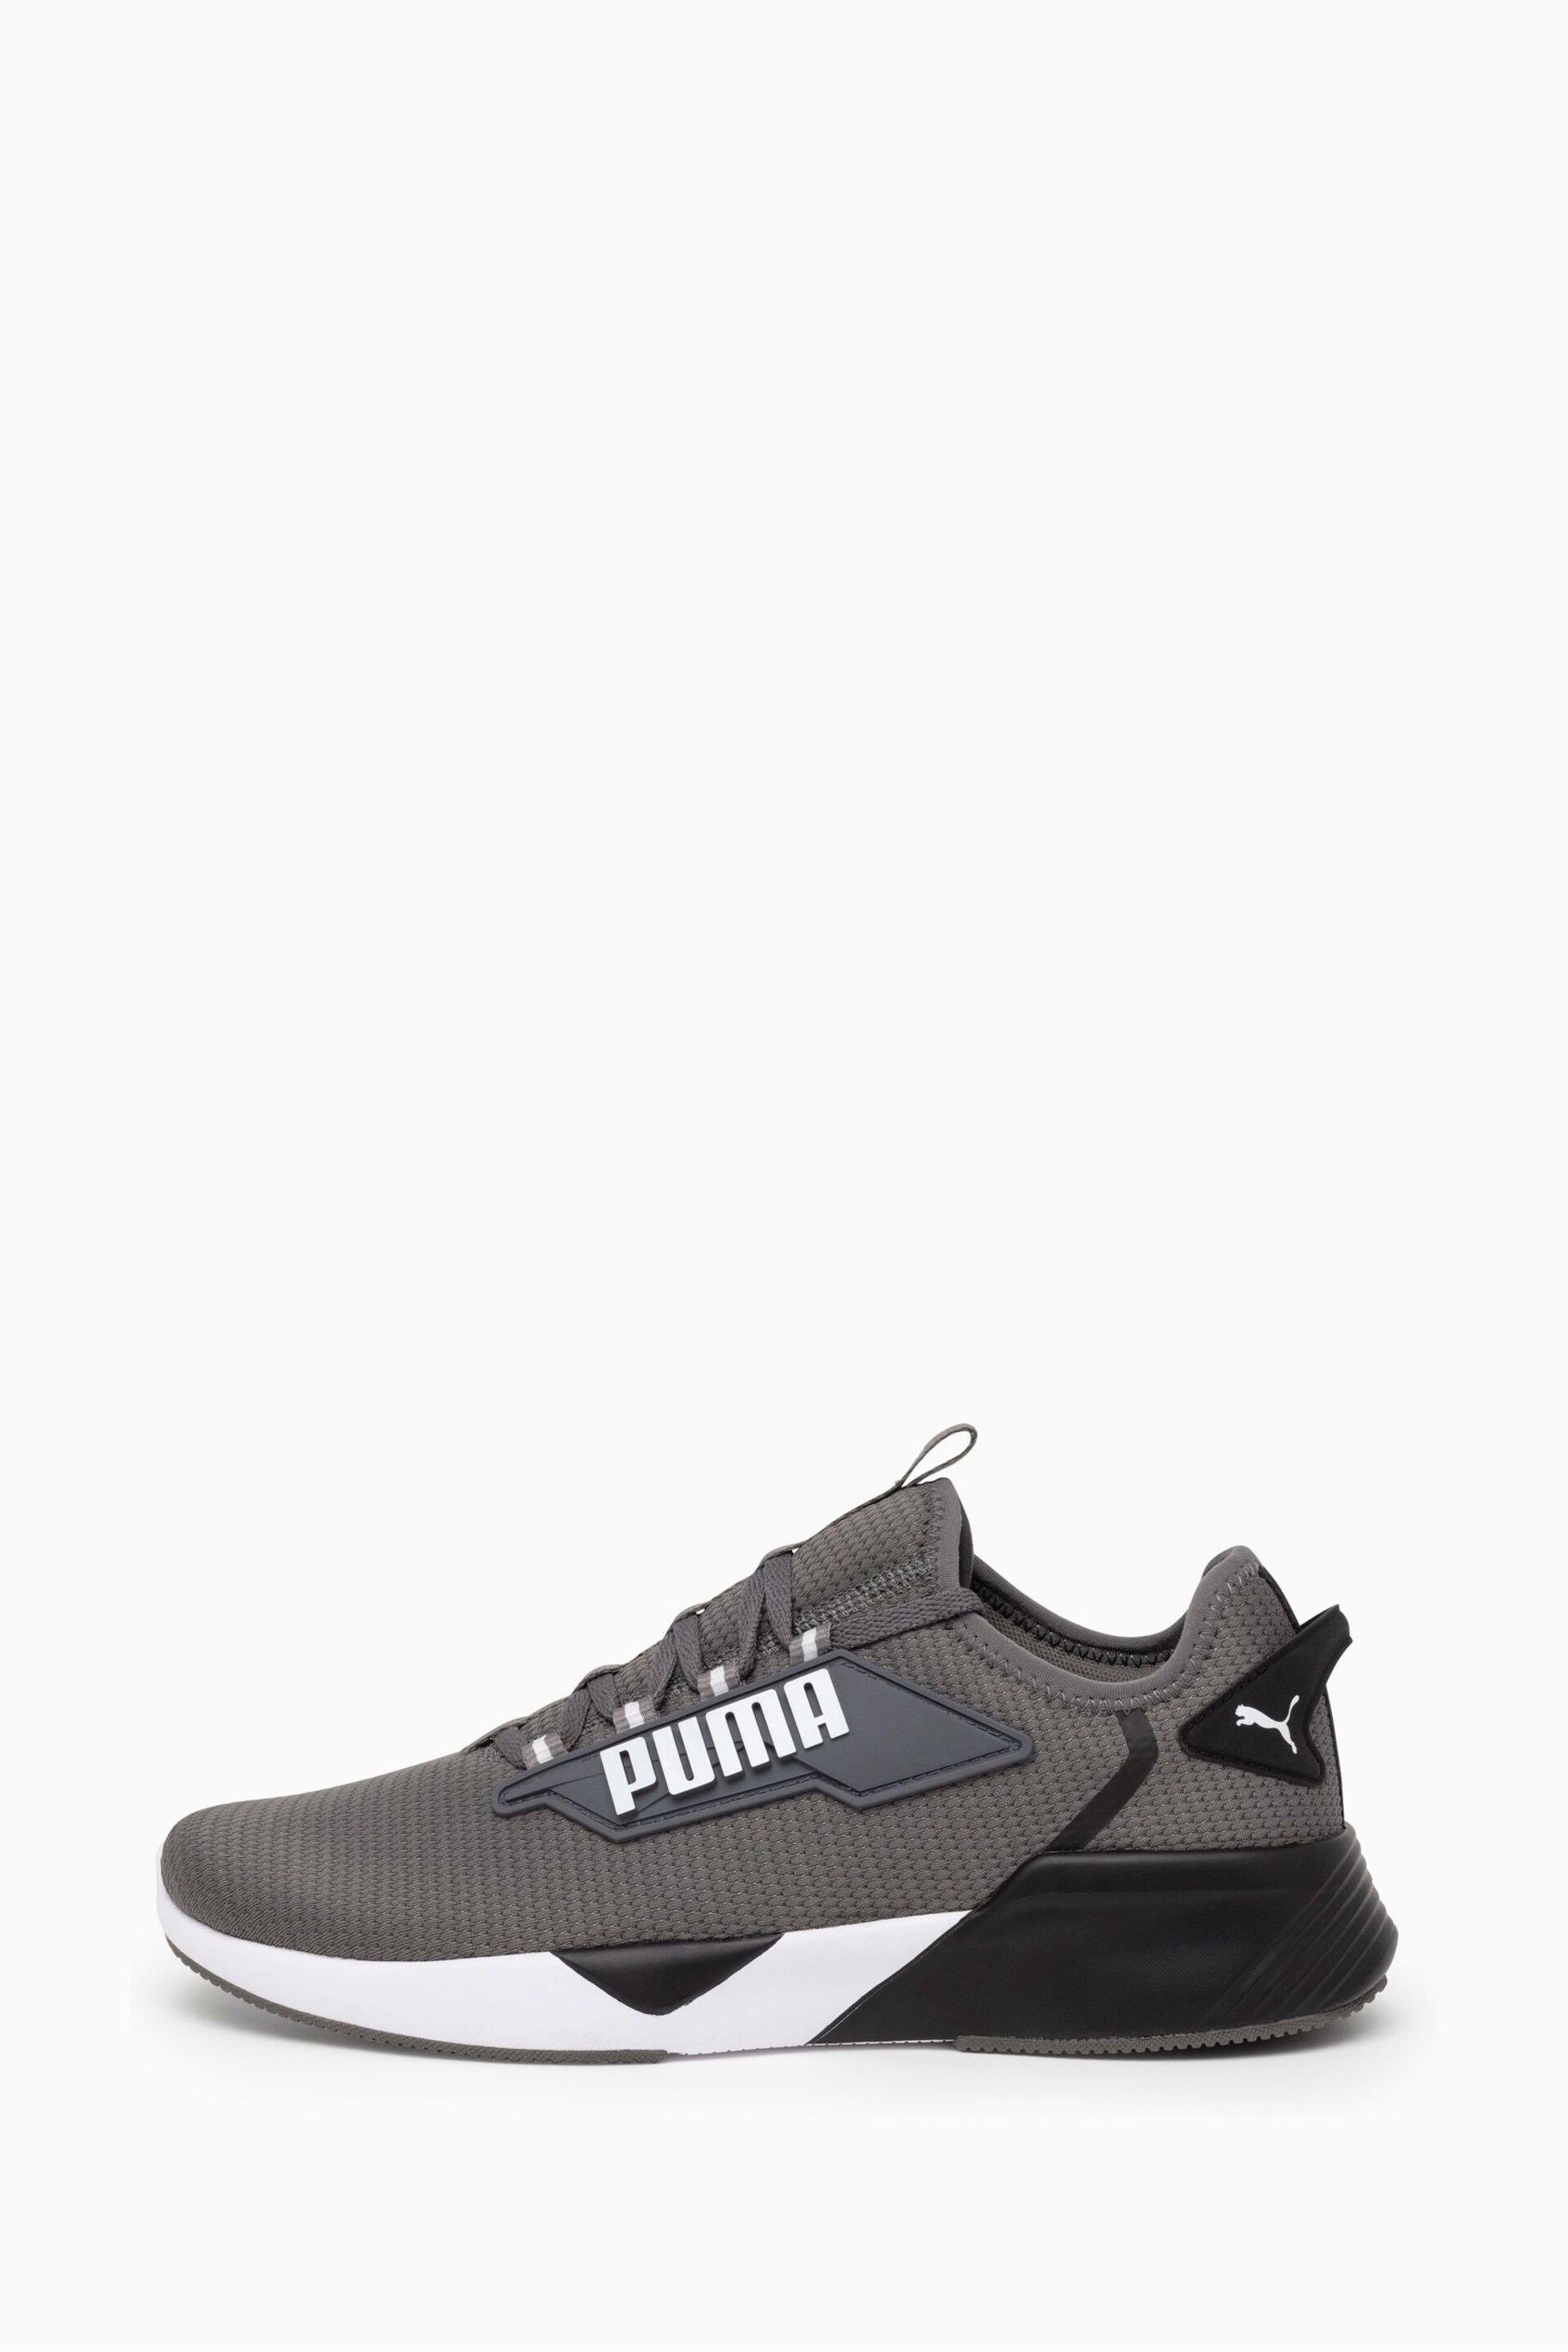 Puma Green Retaliate 2 Running Shoes - Image 1 of 6